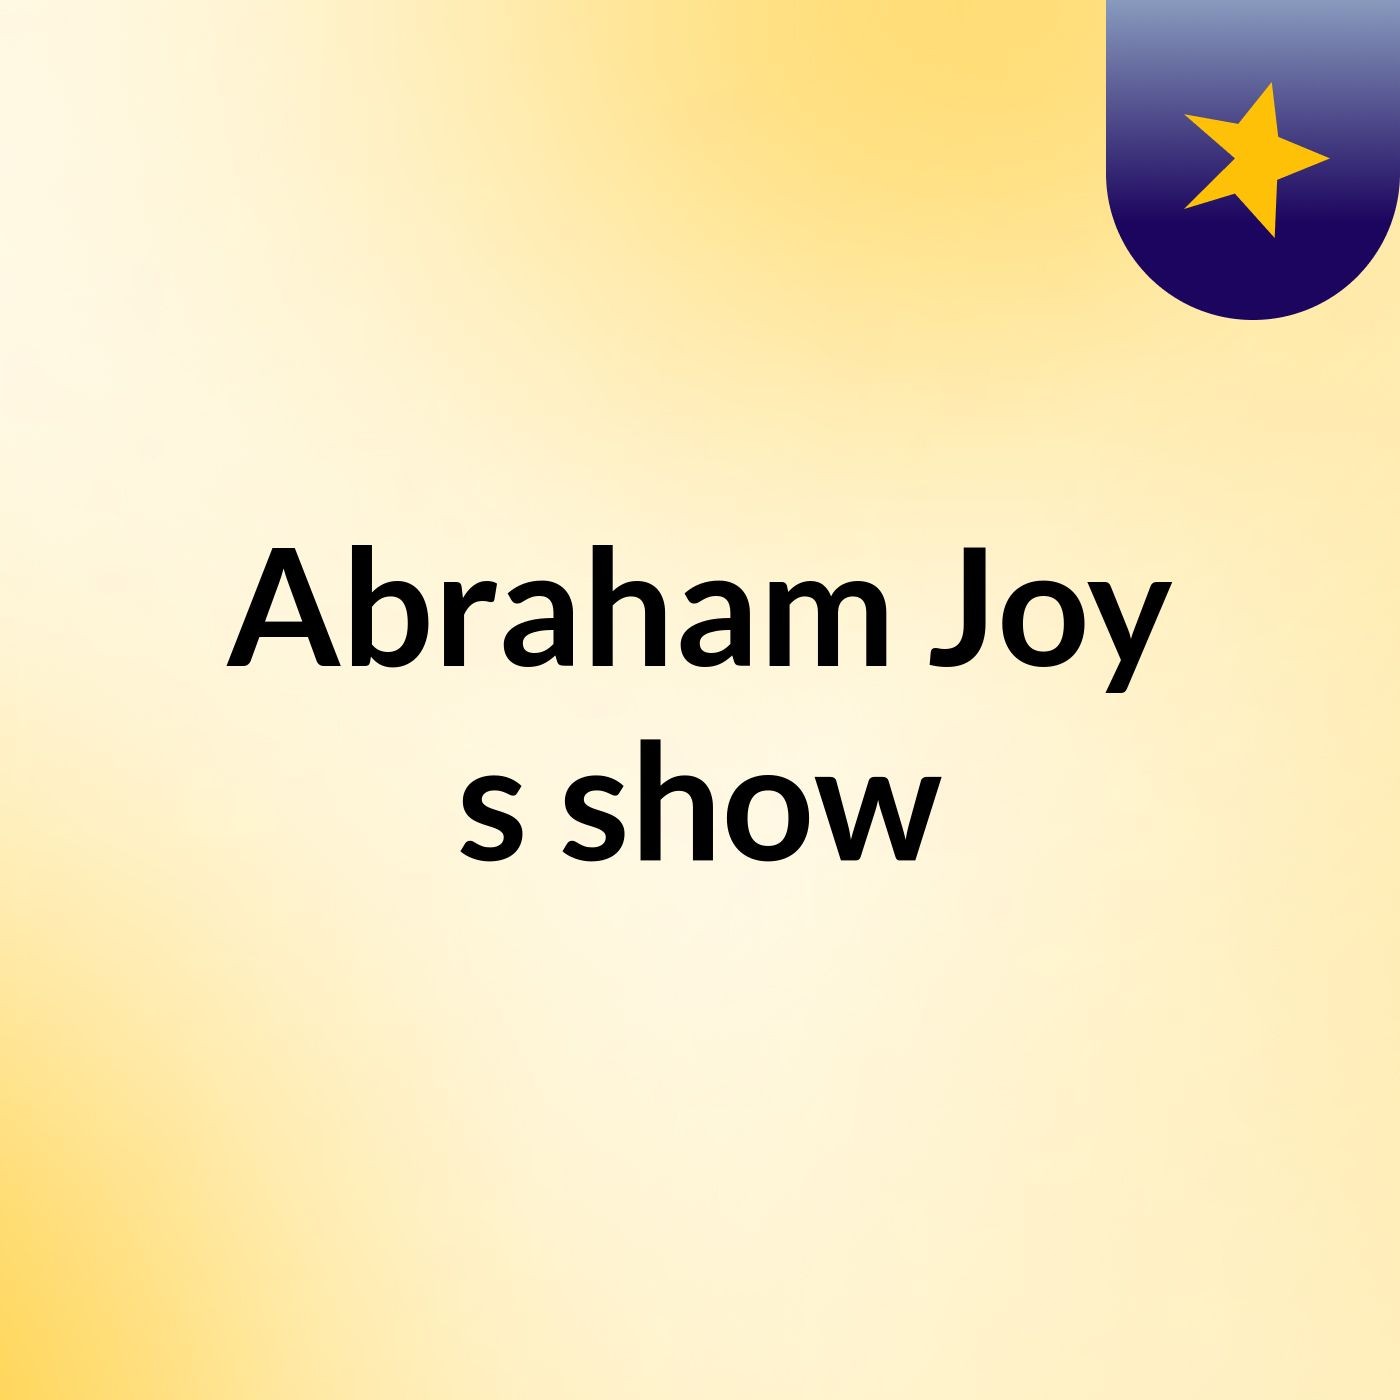 Abraham Joy's show